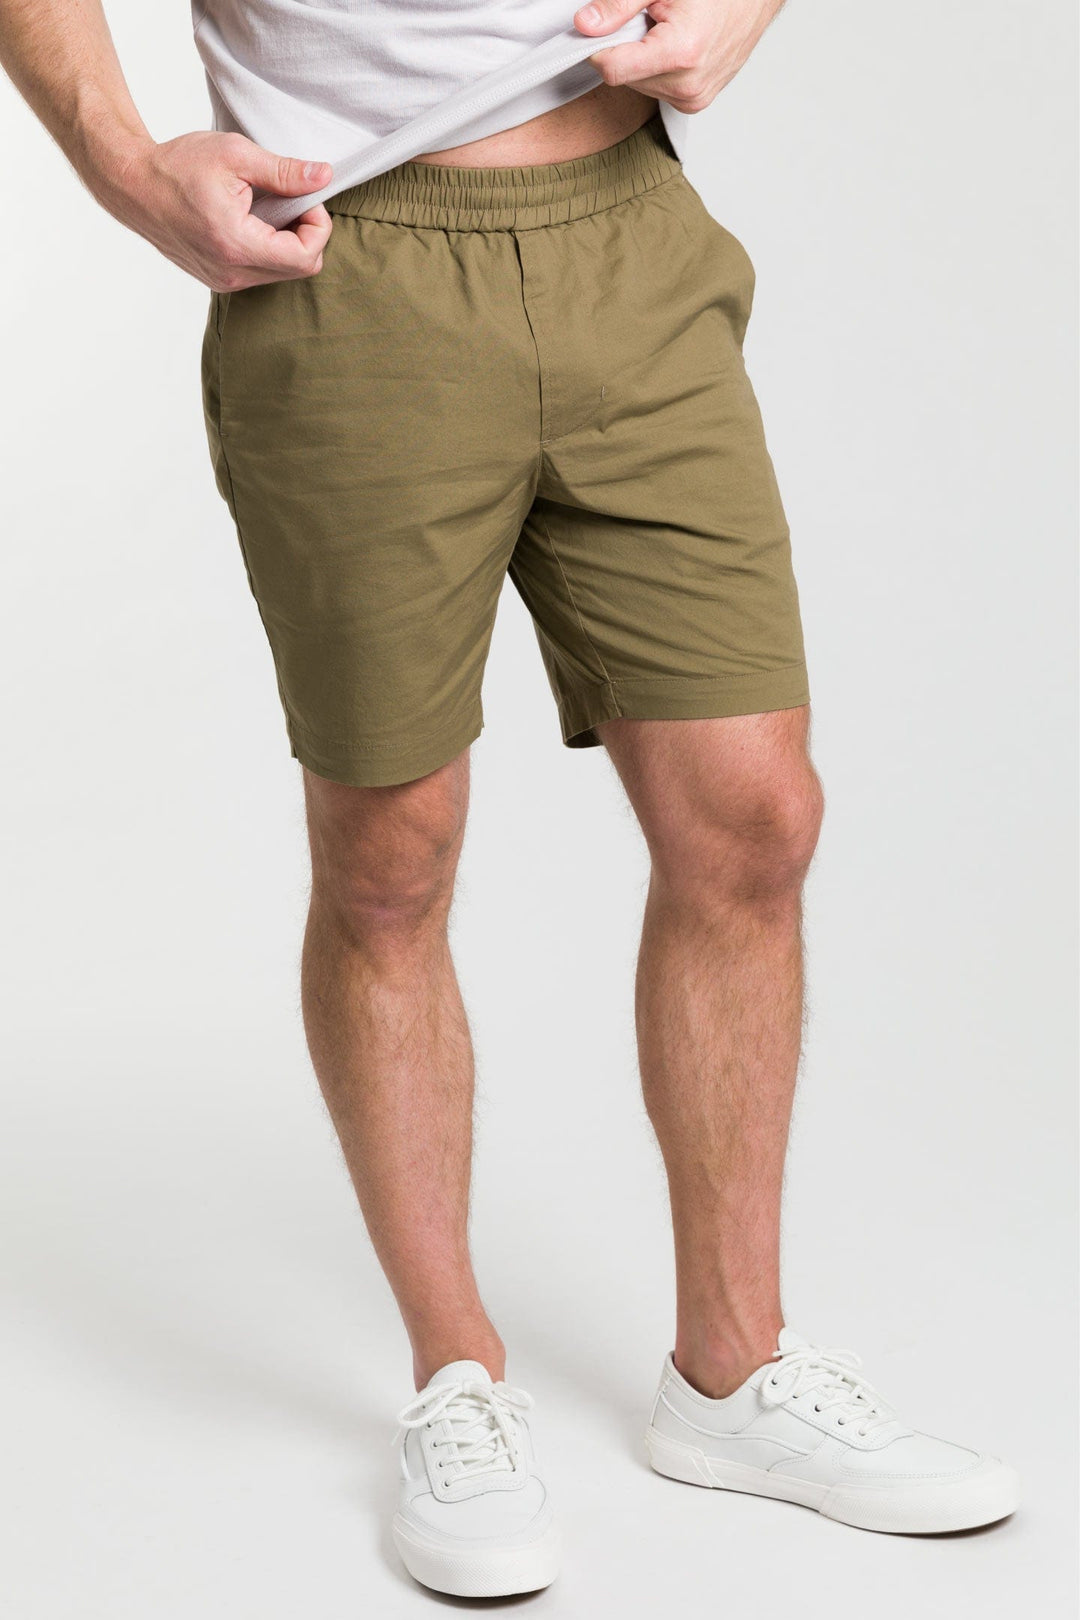 Ash & Erie Brown Stretch Corduroy Pant for Short Men